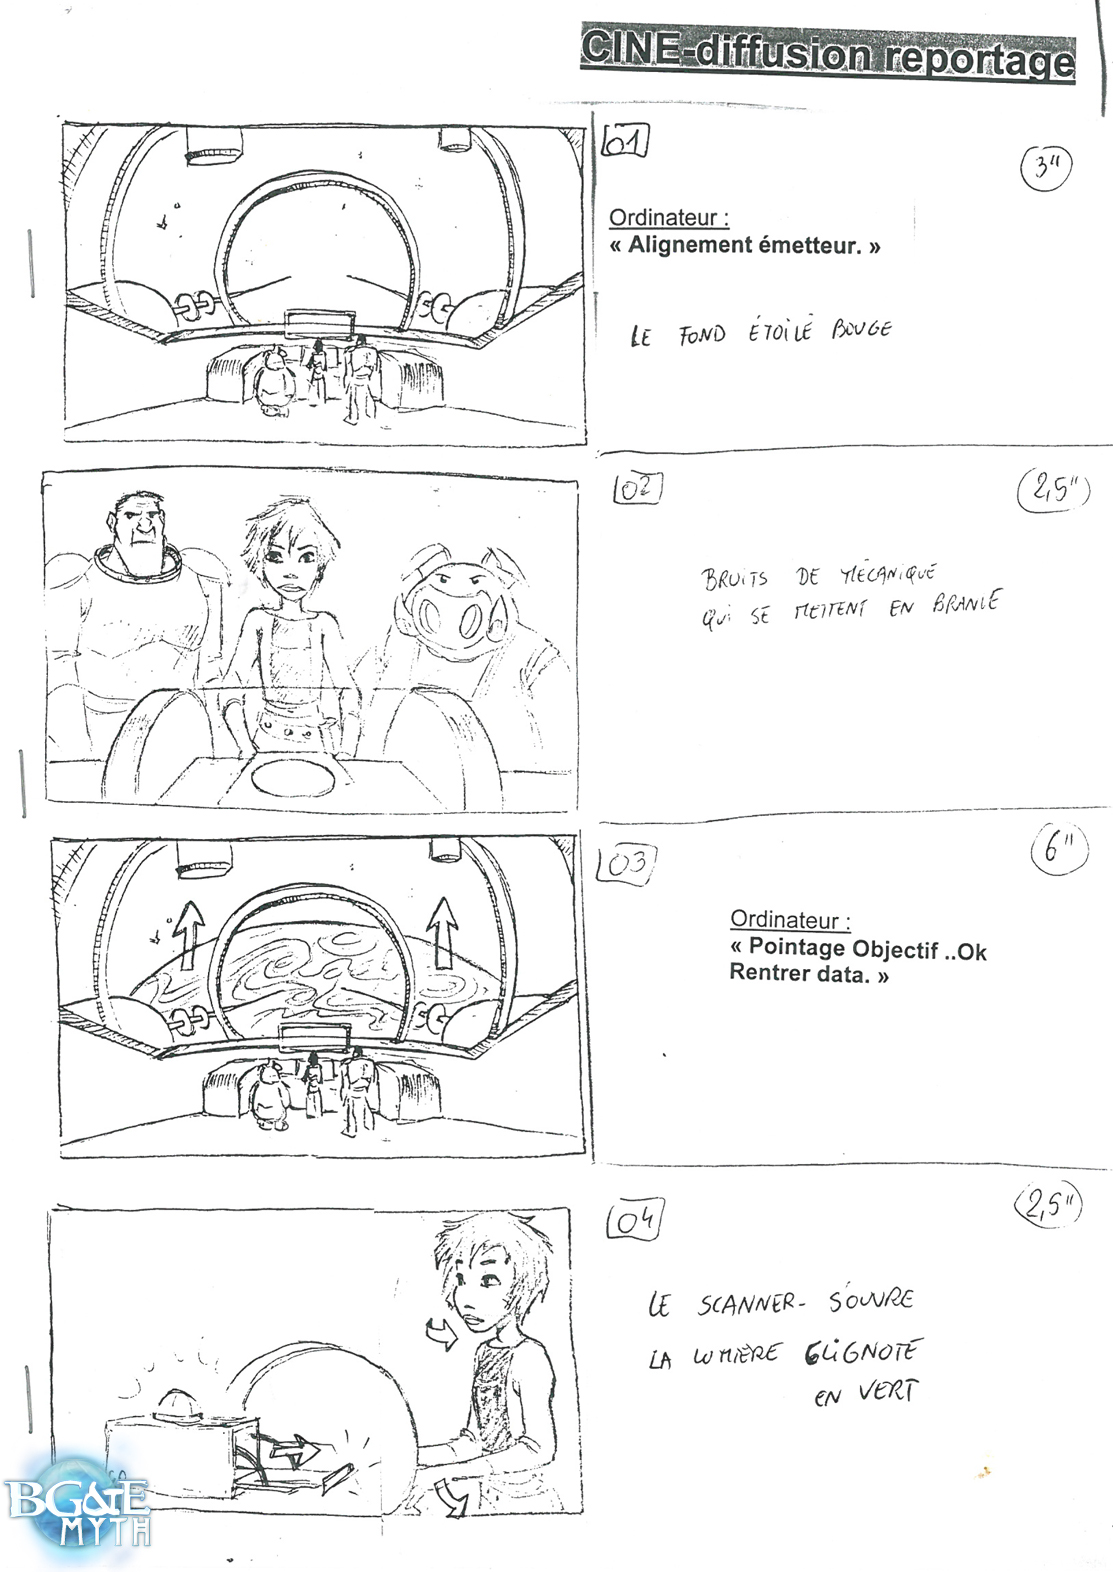 [Storyboard] Diffusion du reportage - Page 1